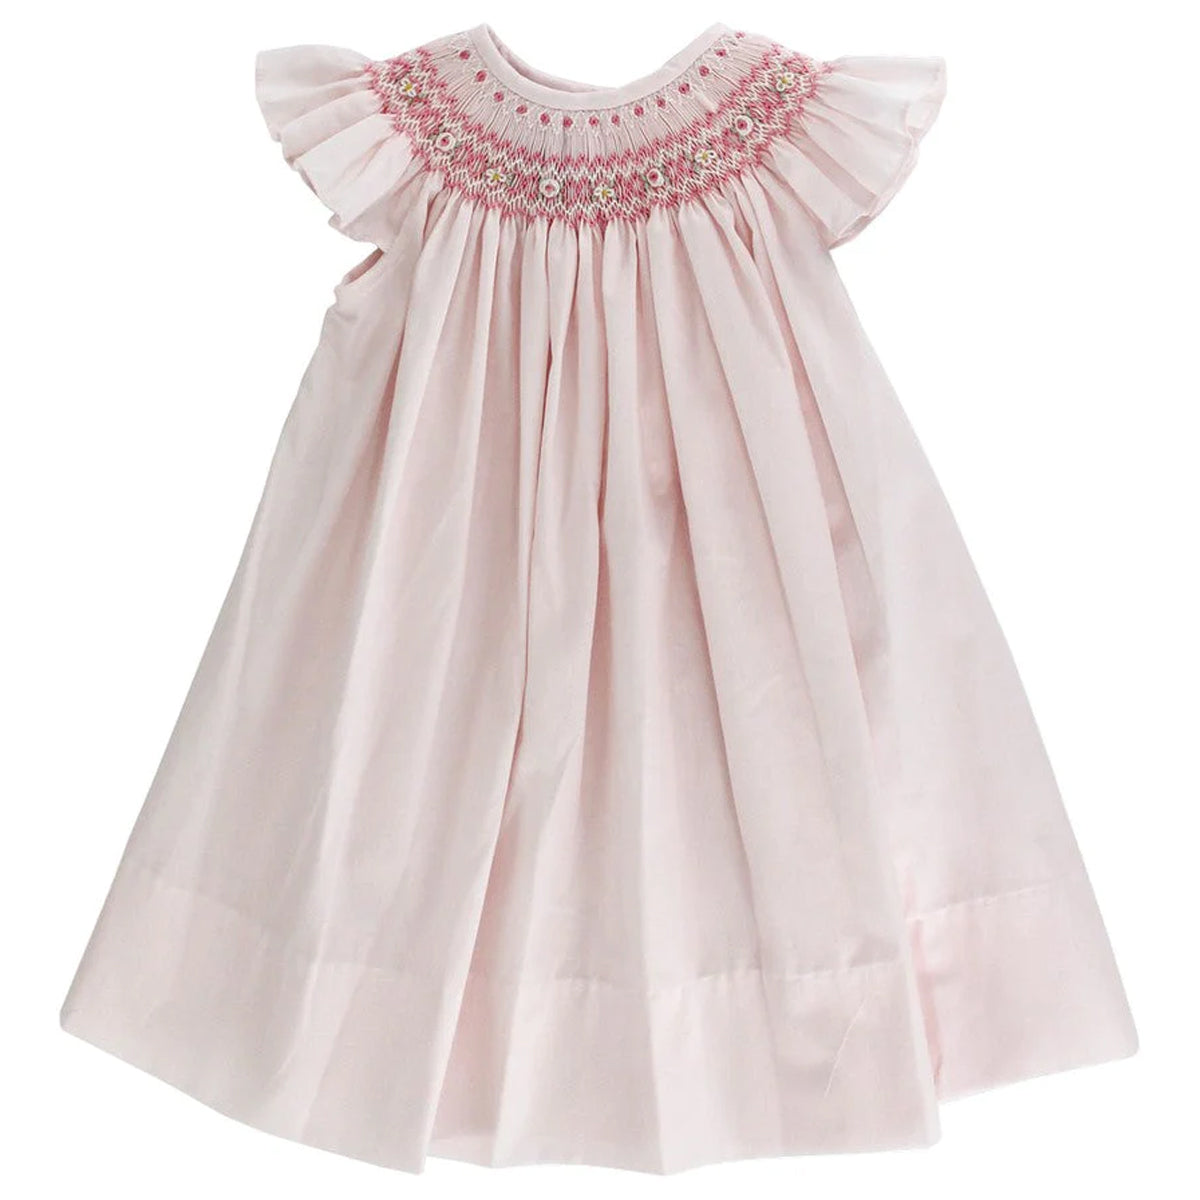 Pale Pink w/ White Flowers Bishop Dress